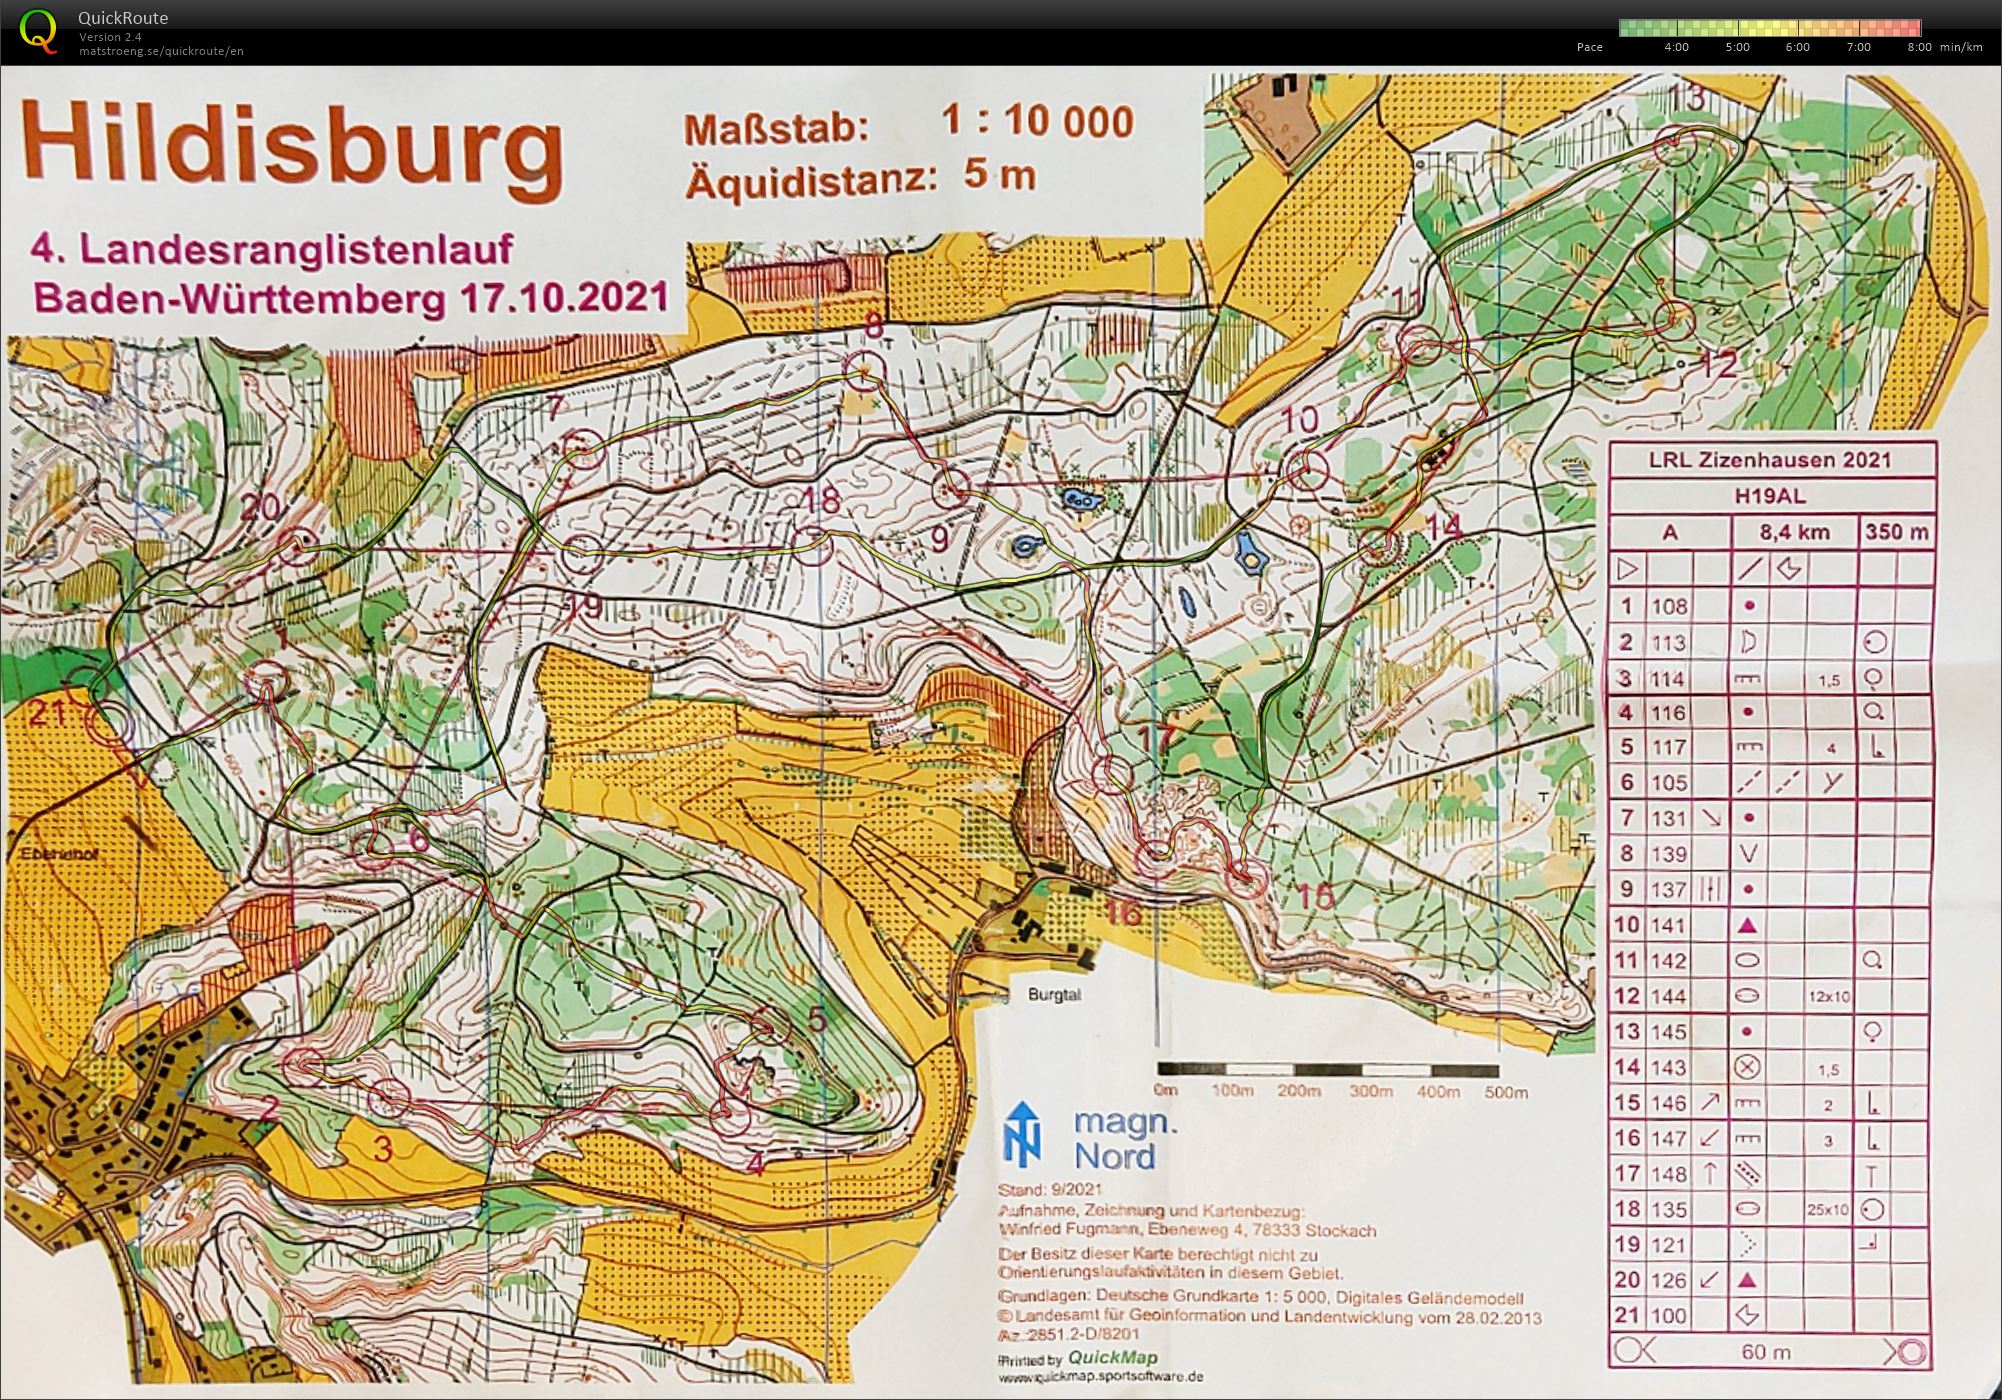 Reagional Ranking Event Zizenhausen (17-10-2021)